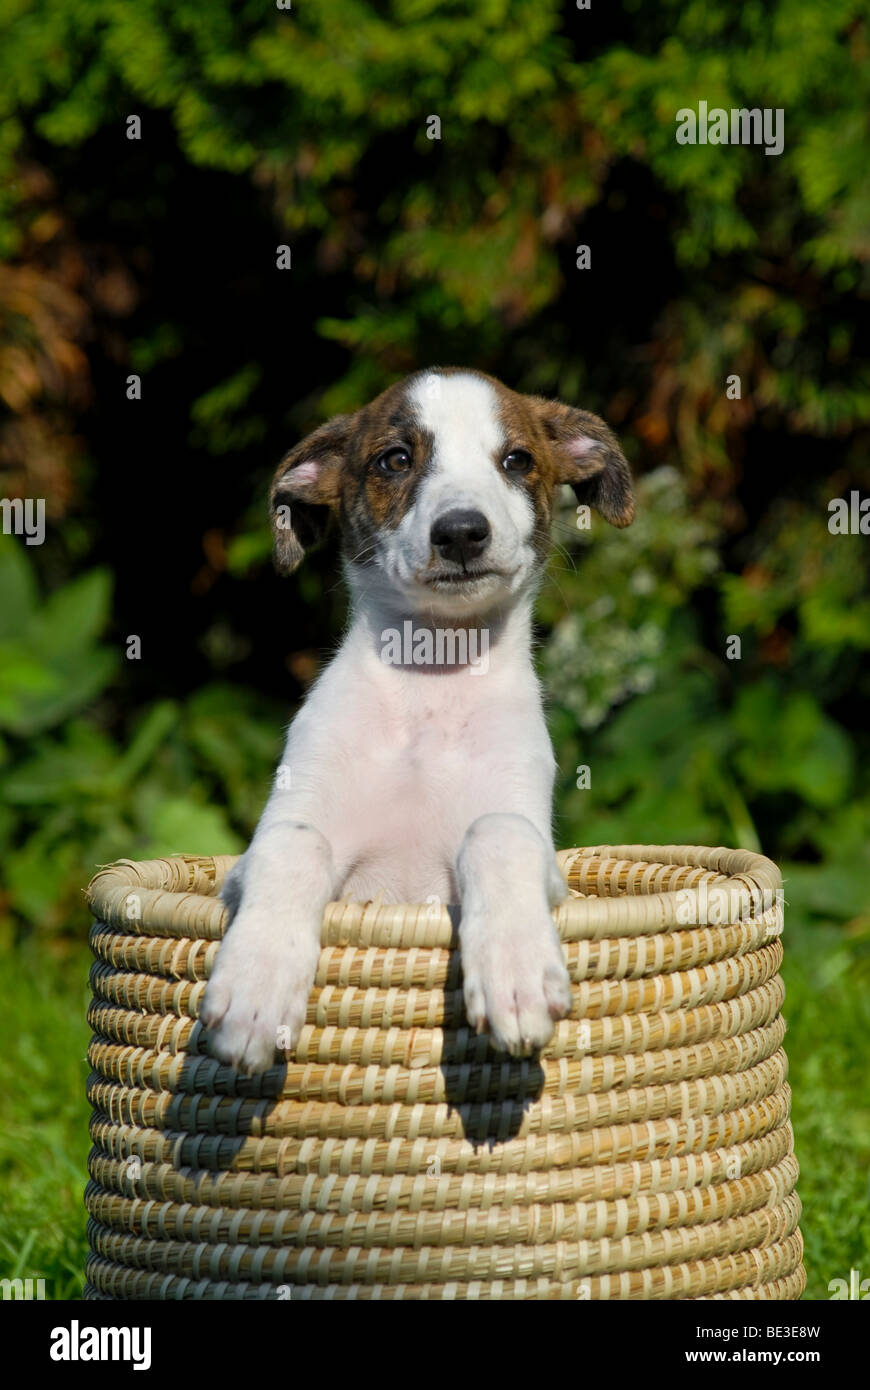 Magyar Agar, Hungarian Greyhound puppy, sitting in a wicker basket Stock Photo